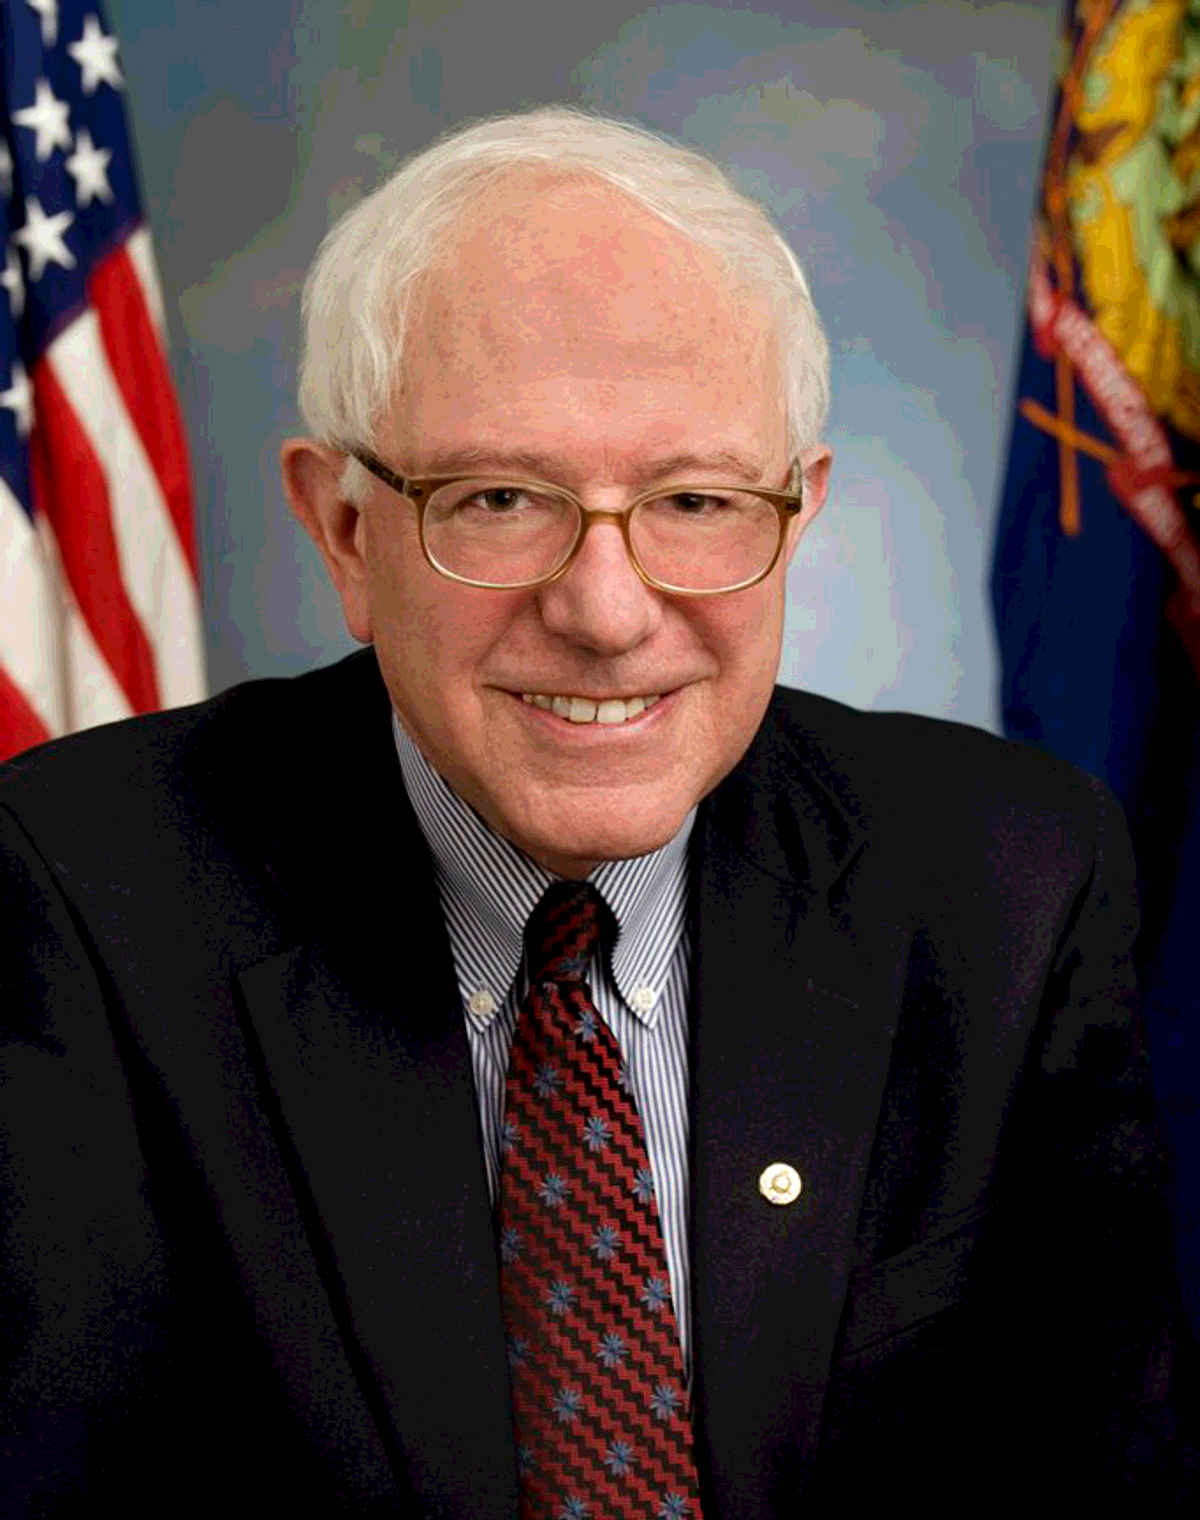 Portrait of Bernie Sanders, junior US Senator from Vermont